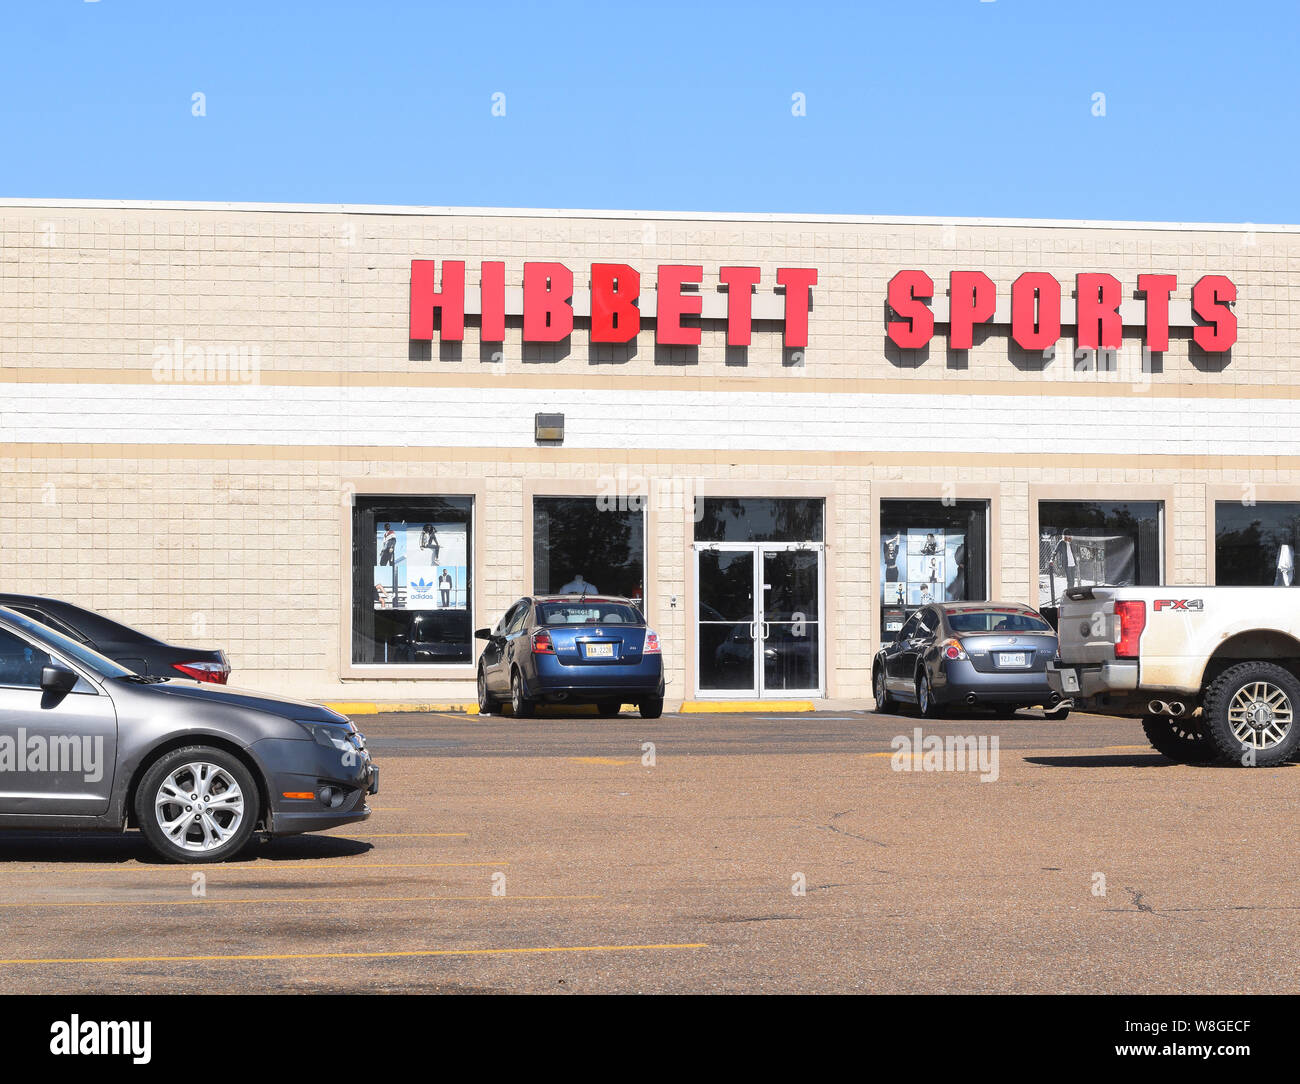 https://c8.alamy.com/comp/W8GECF/hibbett-sports-store-front-in-yazoo-city-mississippi-W8GECF.jpg